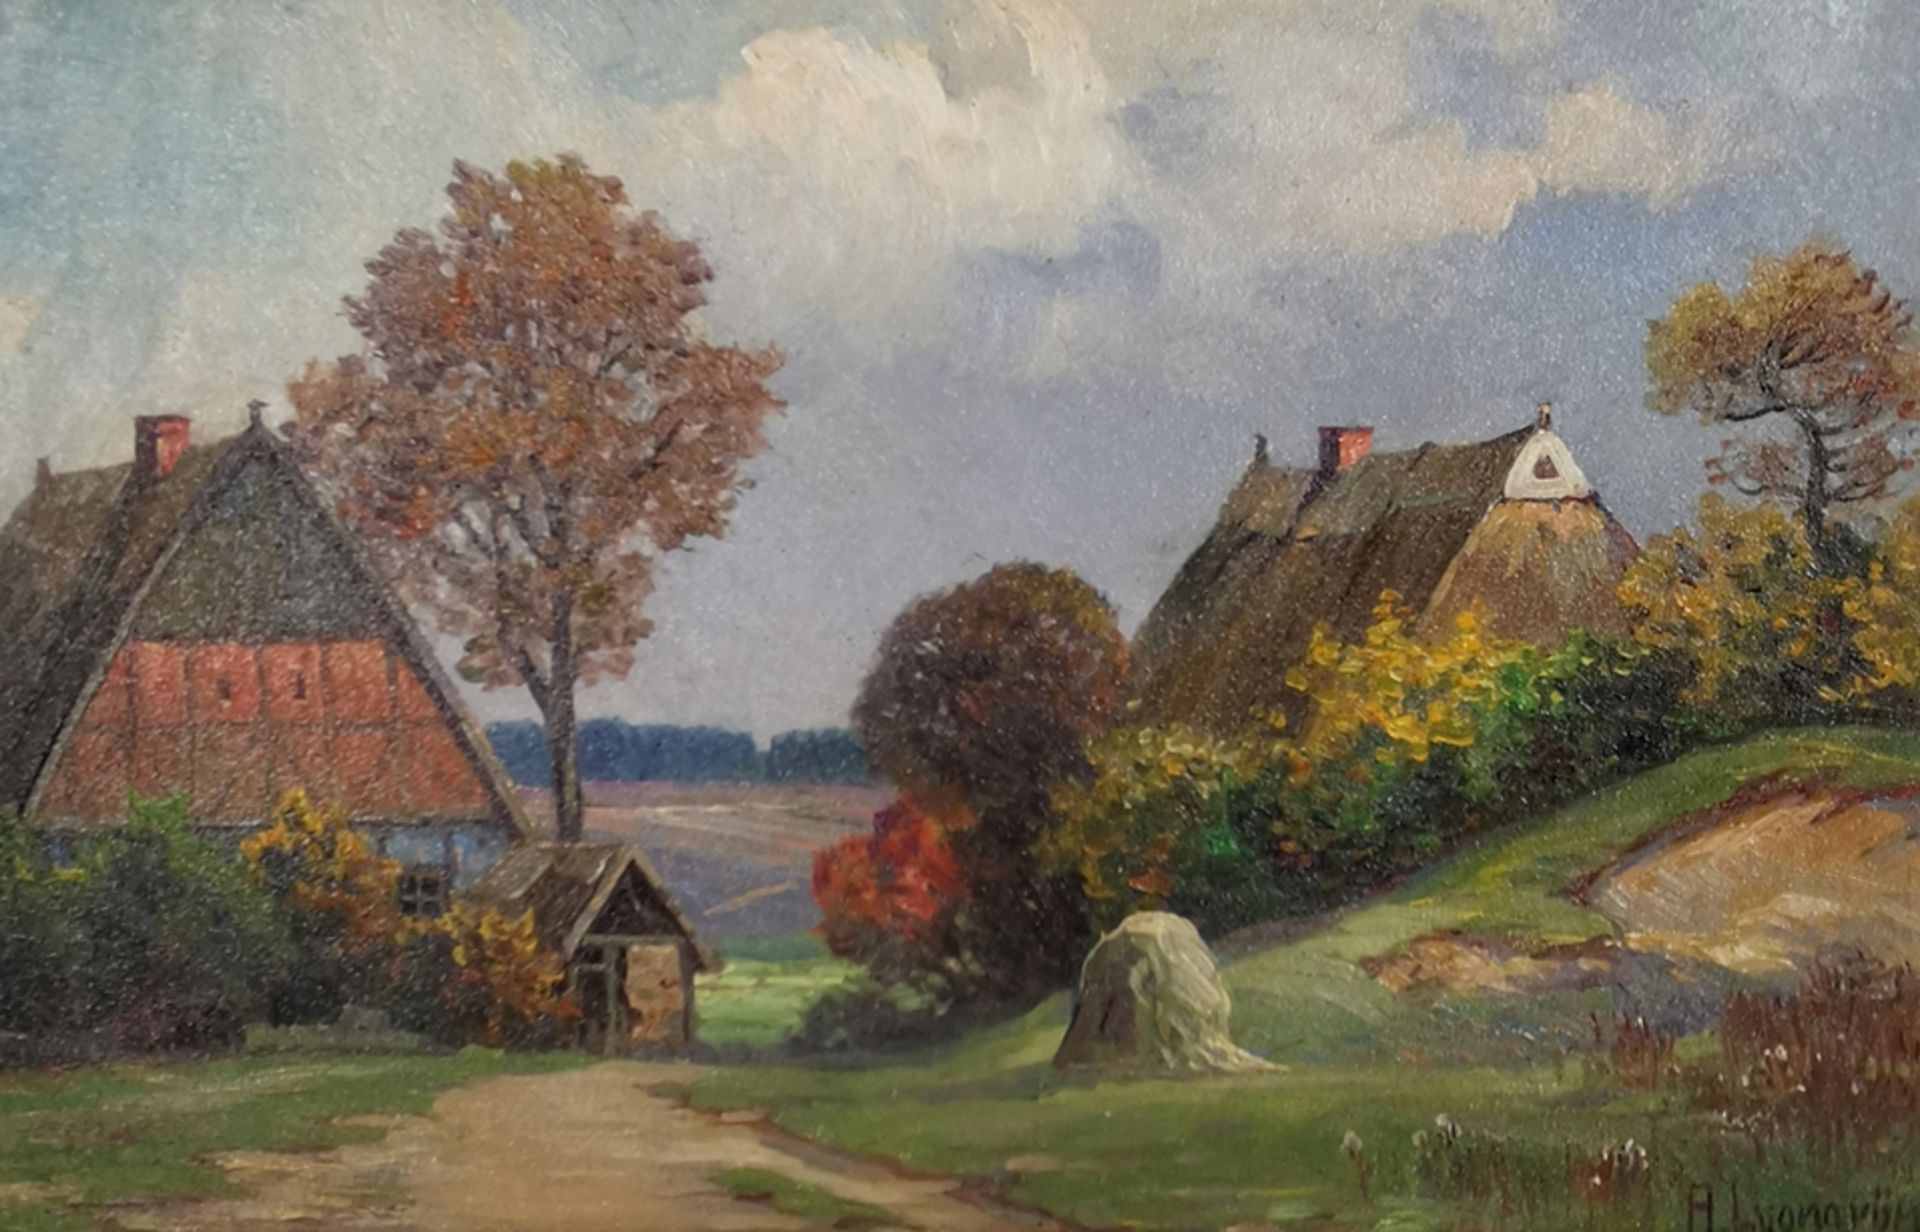 Lyongrün, Arnold (1871 Domnau/Ostpr.-1935 Kühlungsborn) "Landschaft mit Bauerngehöft", Öl/ Lw., sig